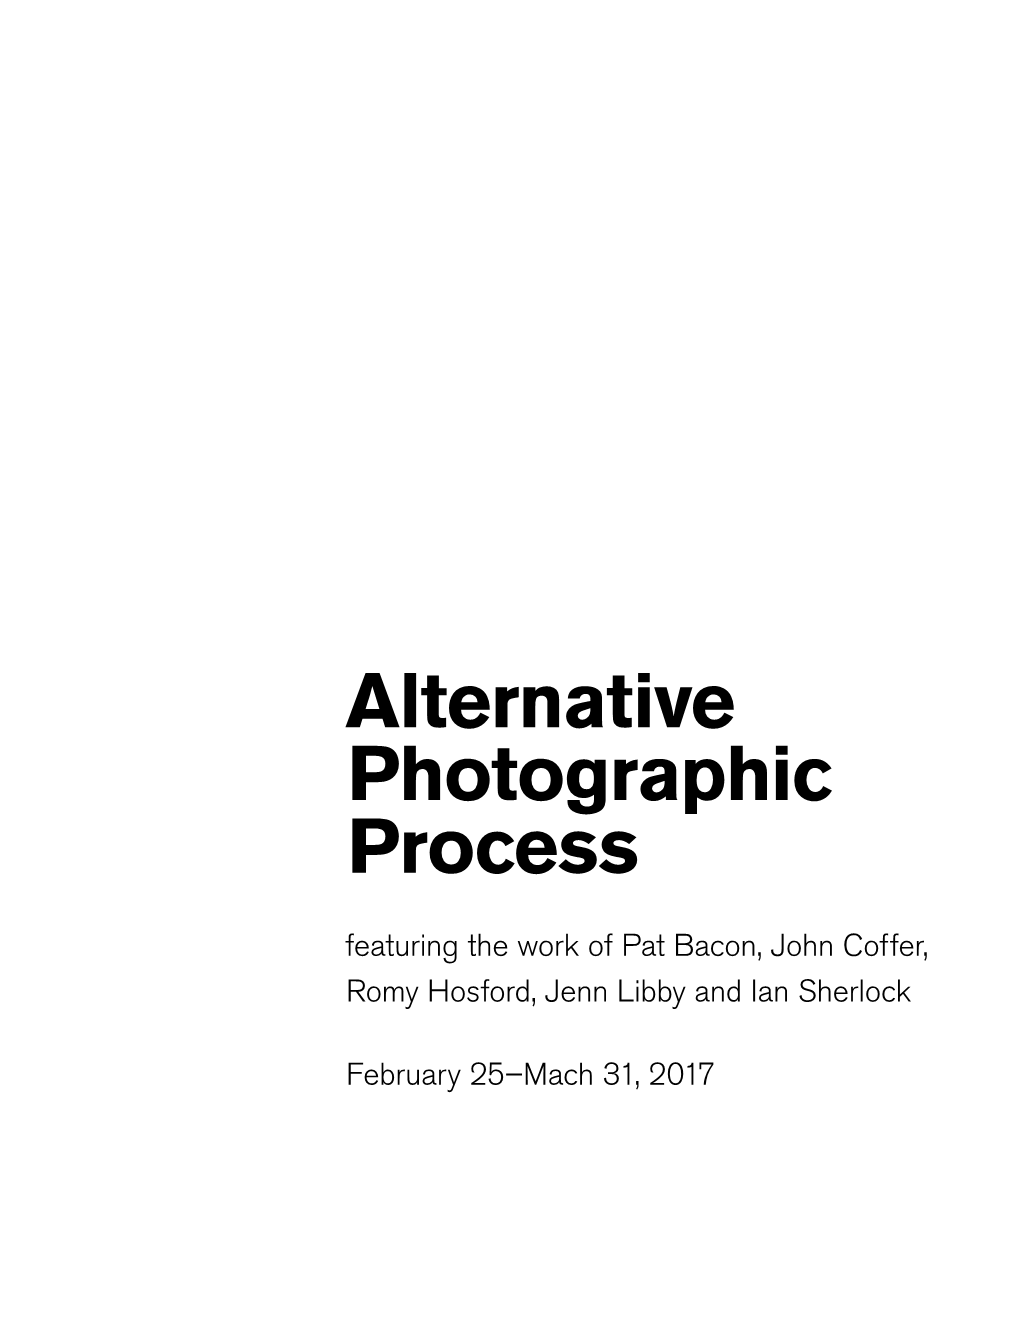 Alternative Photographic Process Featuring the Work of Pat Bacon, John Coffer, Romy Hosford, Jenn Libby and Ian Sherlock